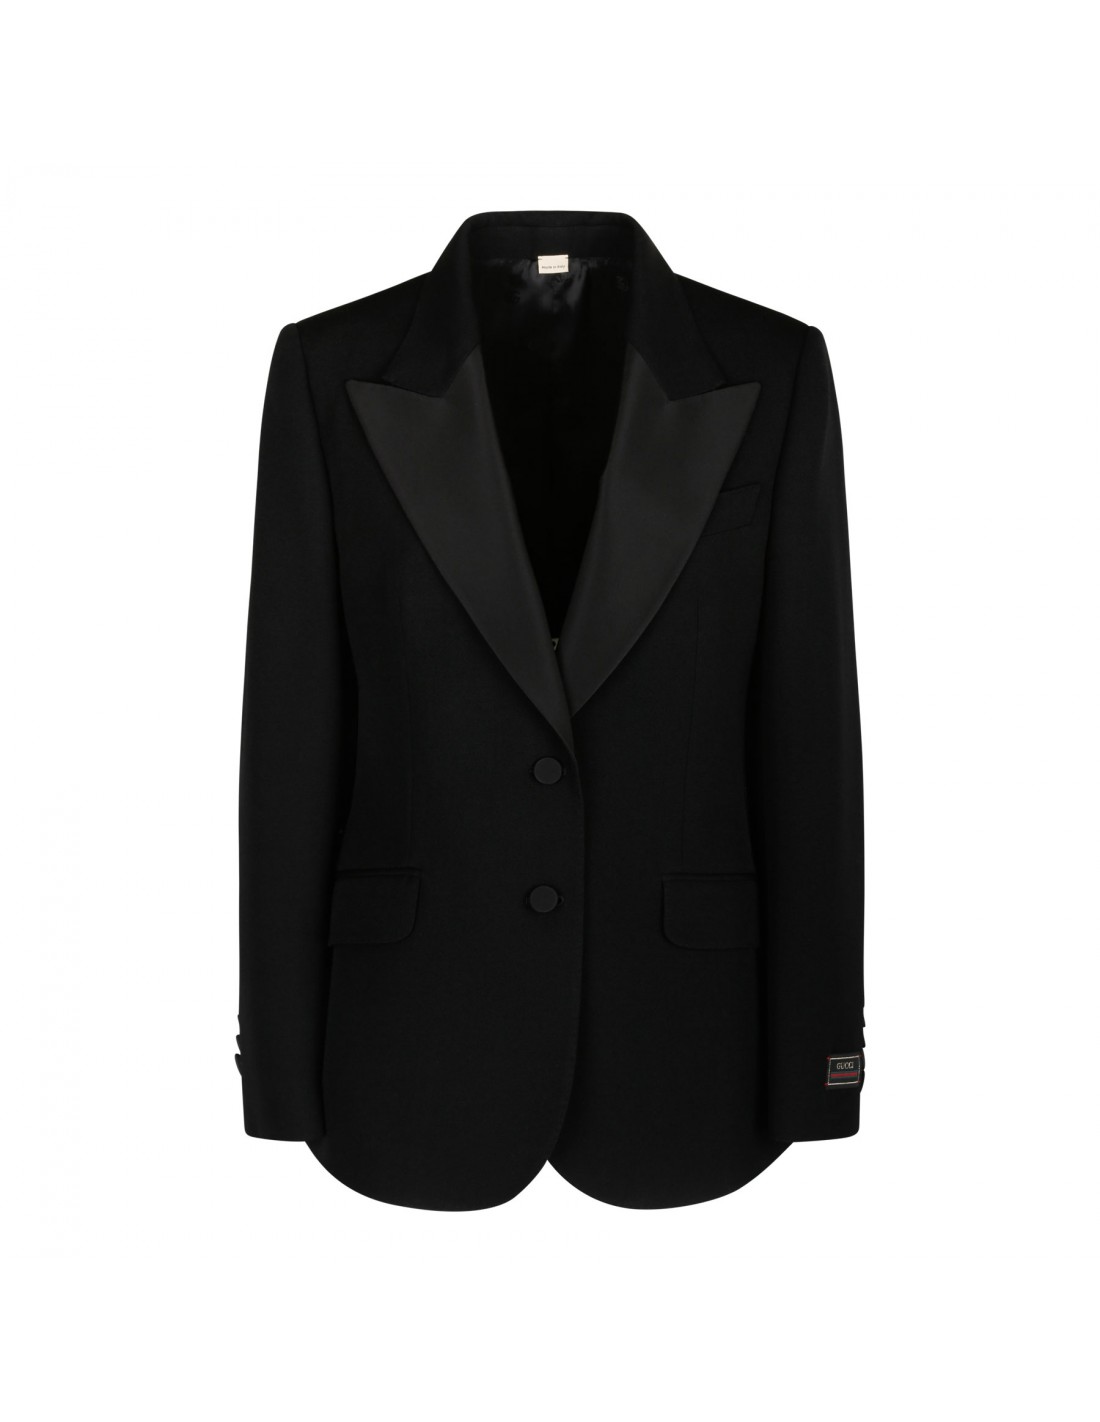 Black tailored jacket